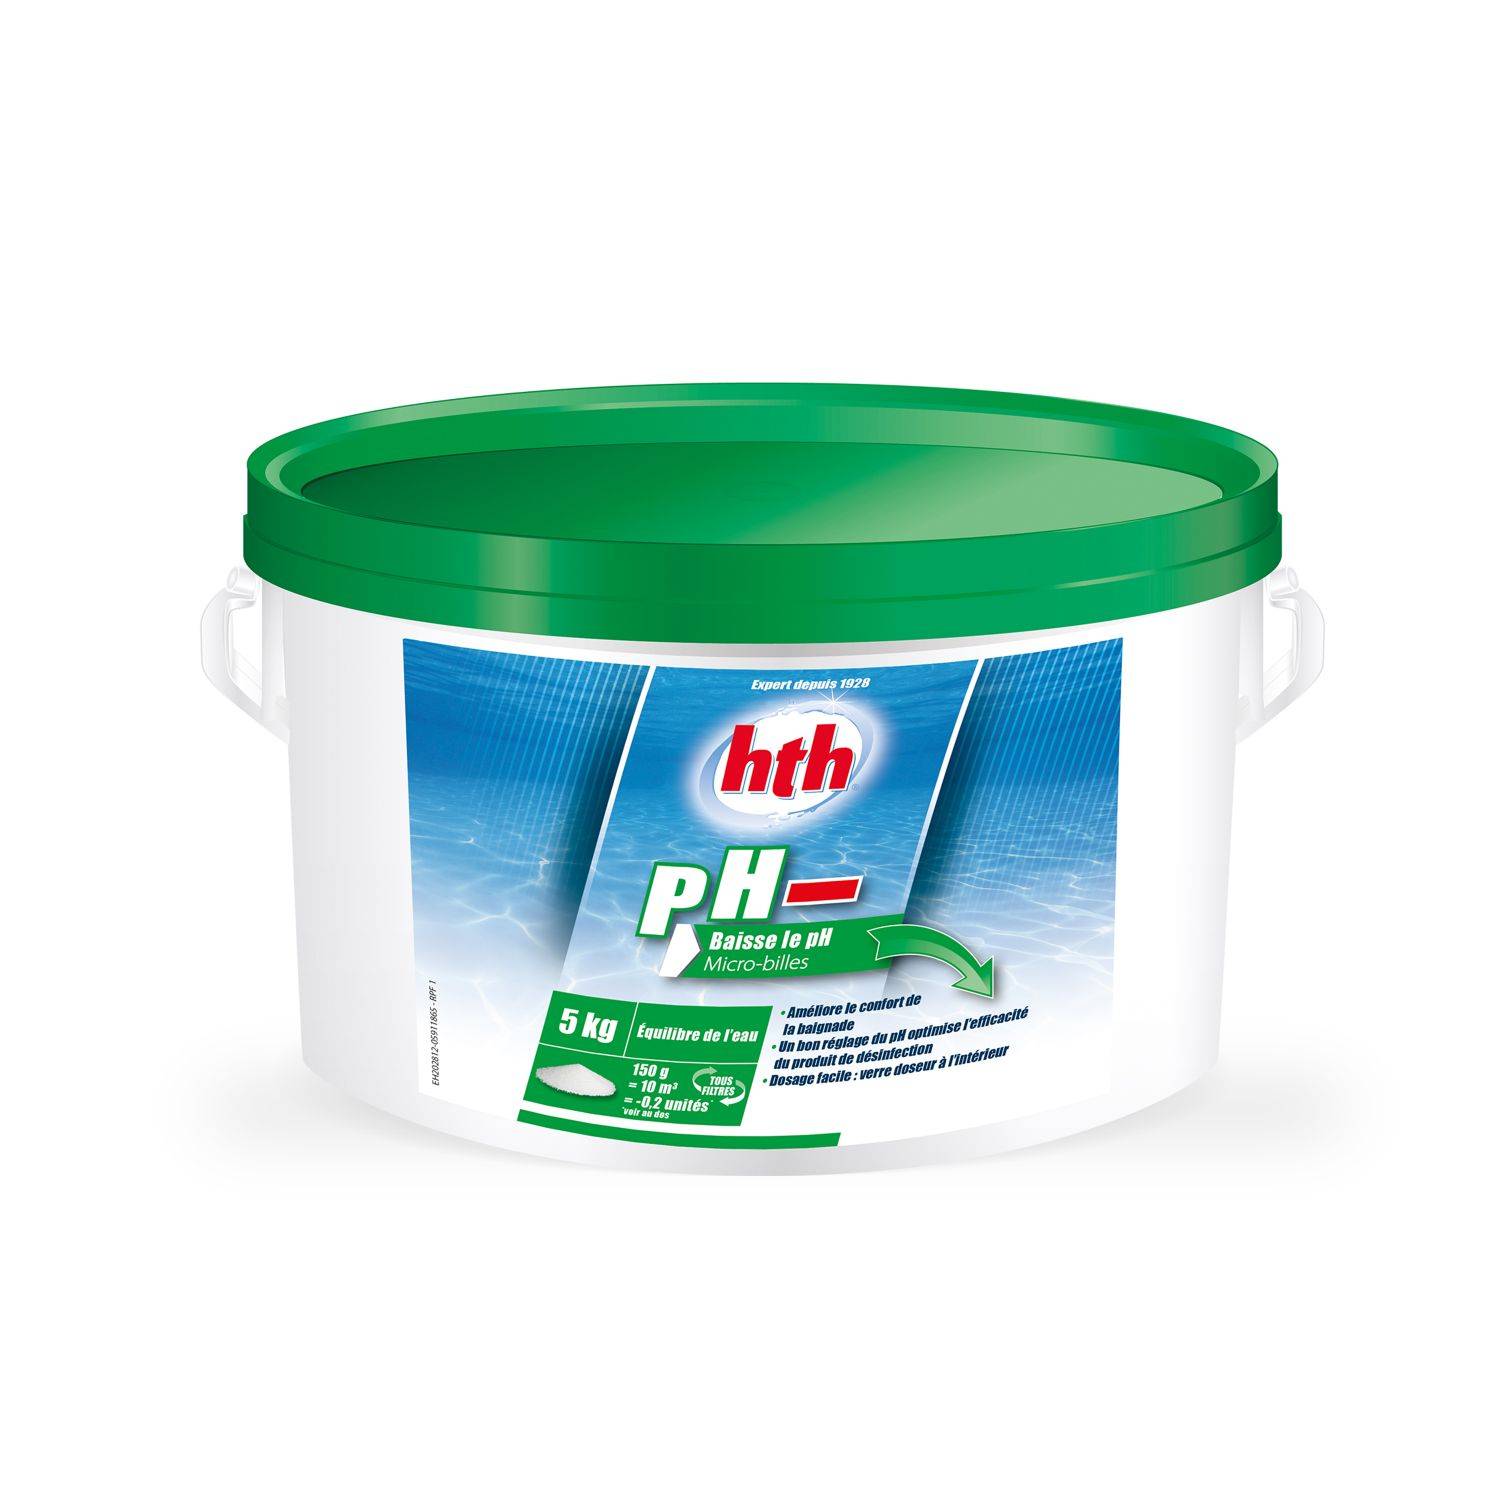 pH MIN HTH behandeling microkorrels, 5,4 kg Photo1